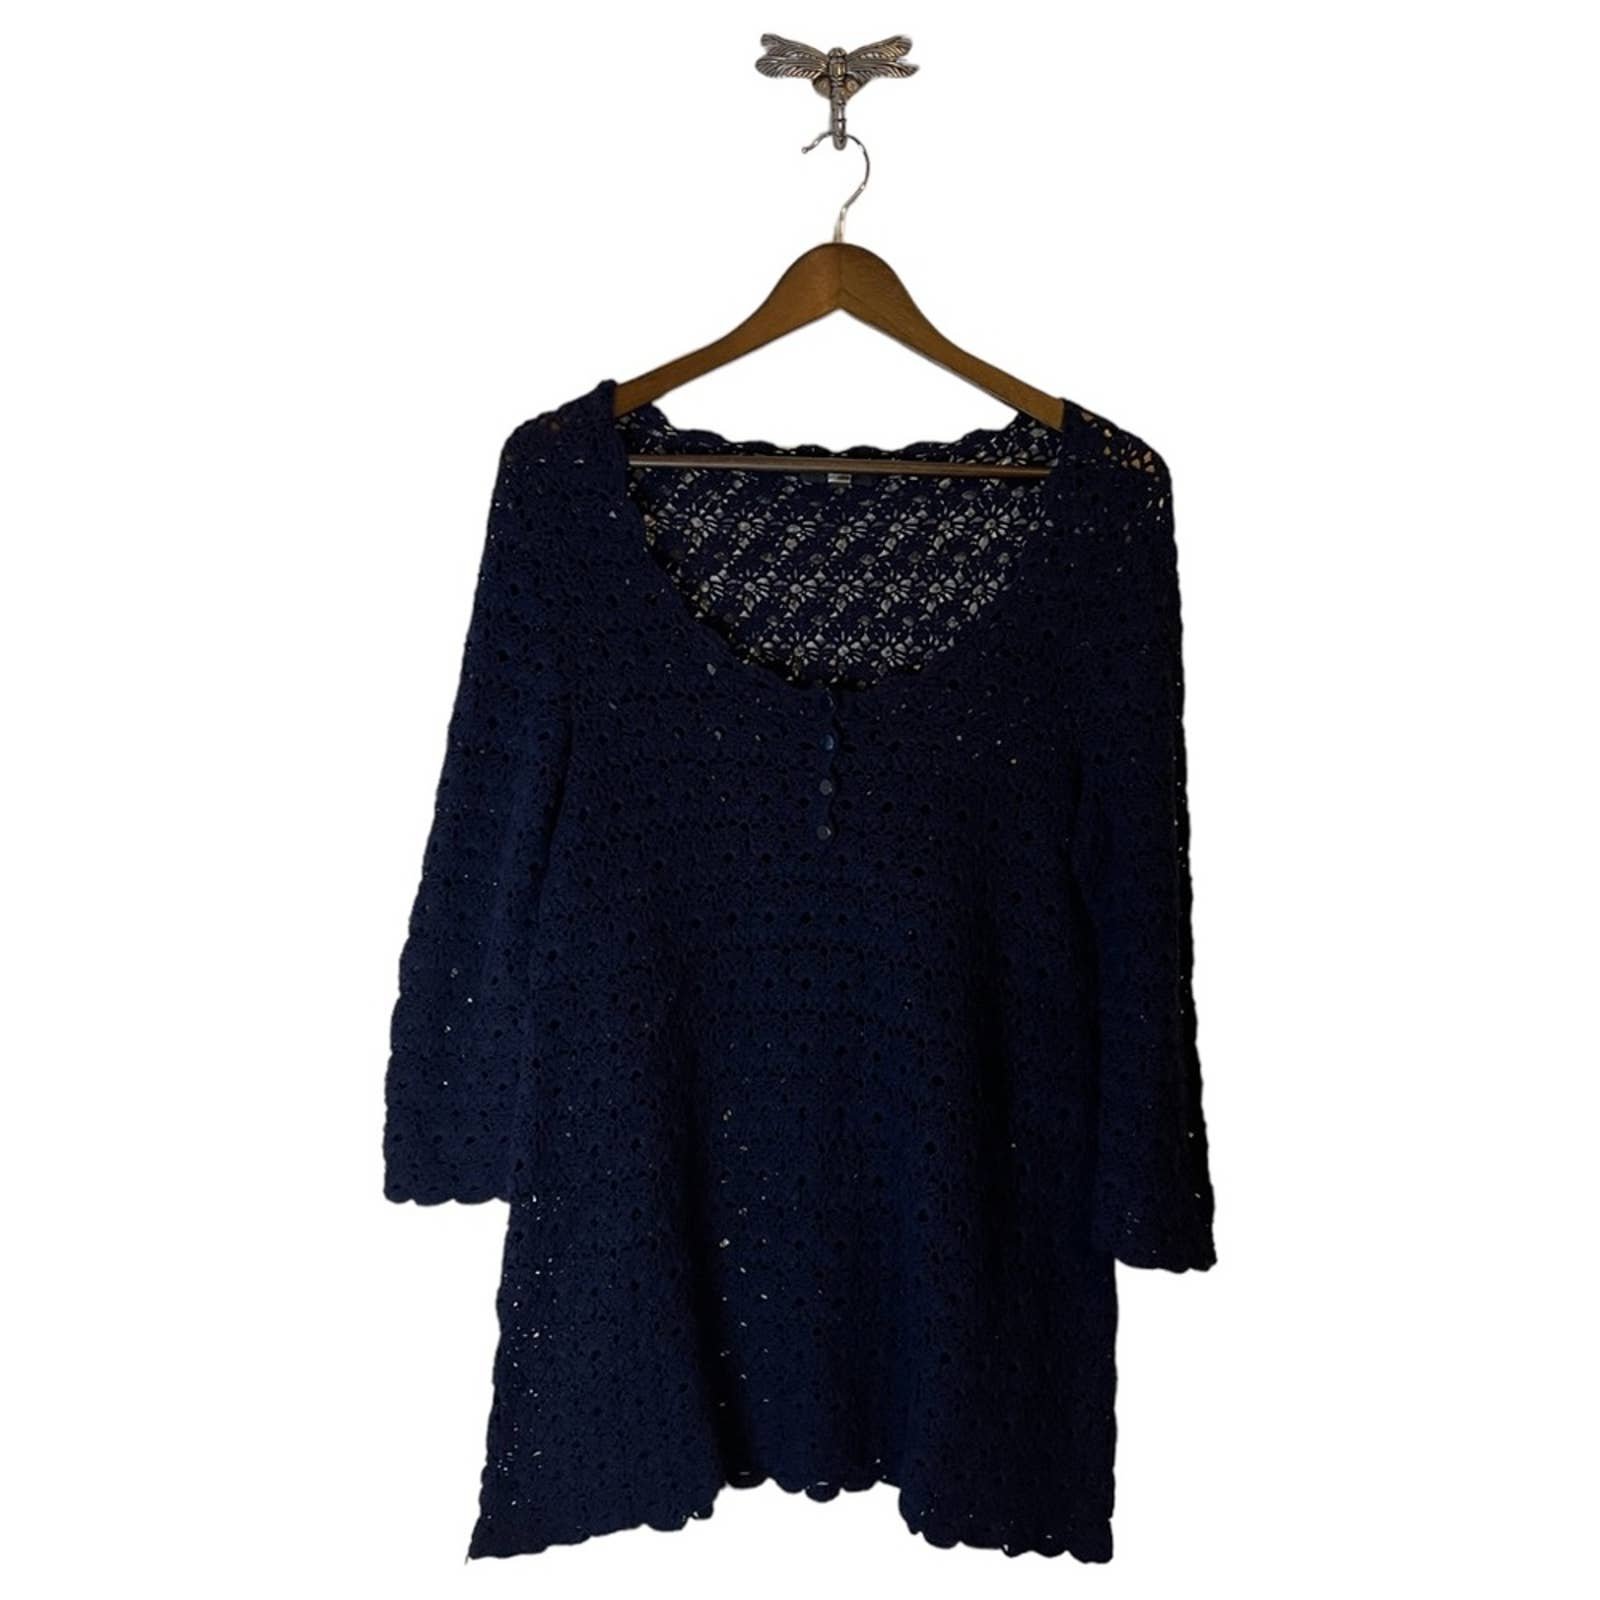 reasonable price Saks Fifth Avenue Navy Blue Open Knit Sweater Women´s Size Medium FuipzrguE Store Online